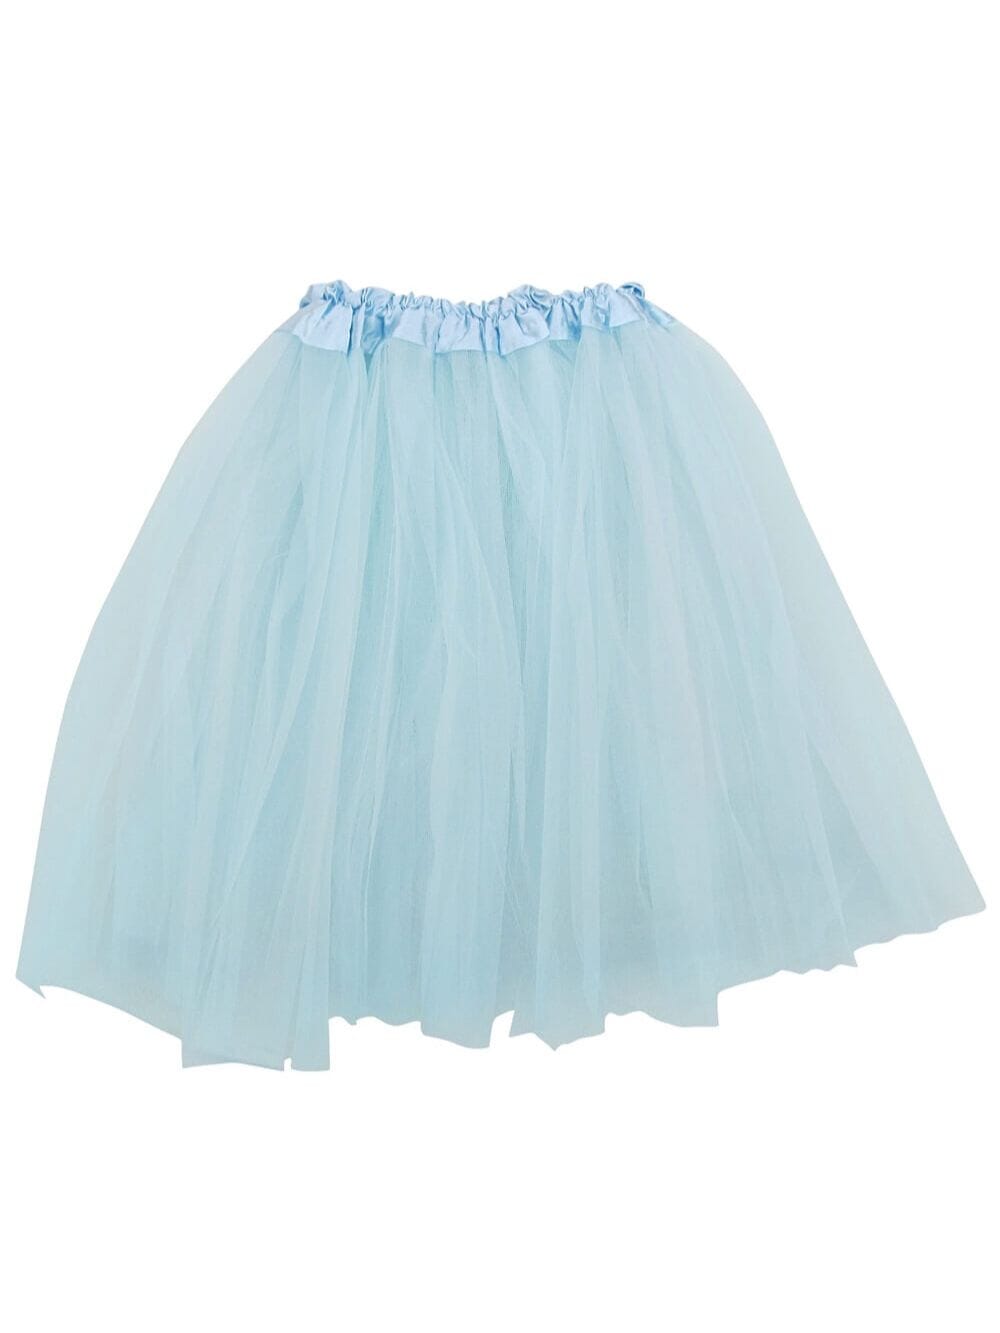 Sky Blue Adult Tutu Skirt - Women's Size 3-Layer Basic Ballet Costume Dance Tutus - Sydney So Sweet